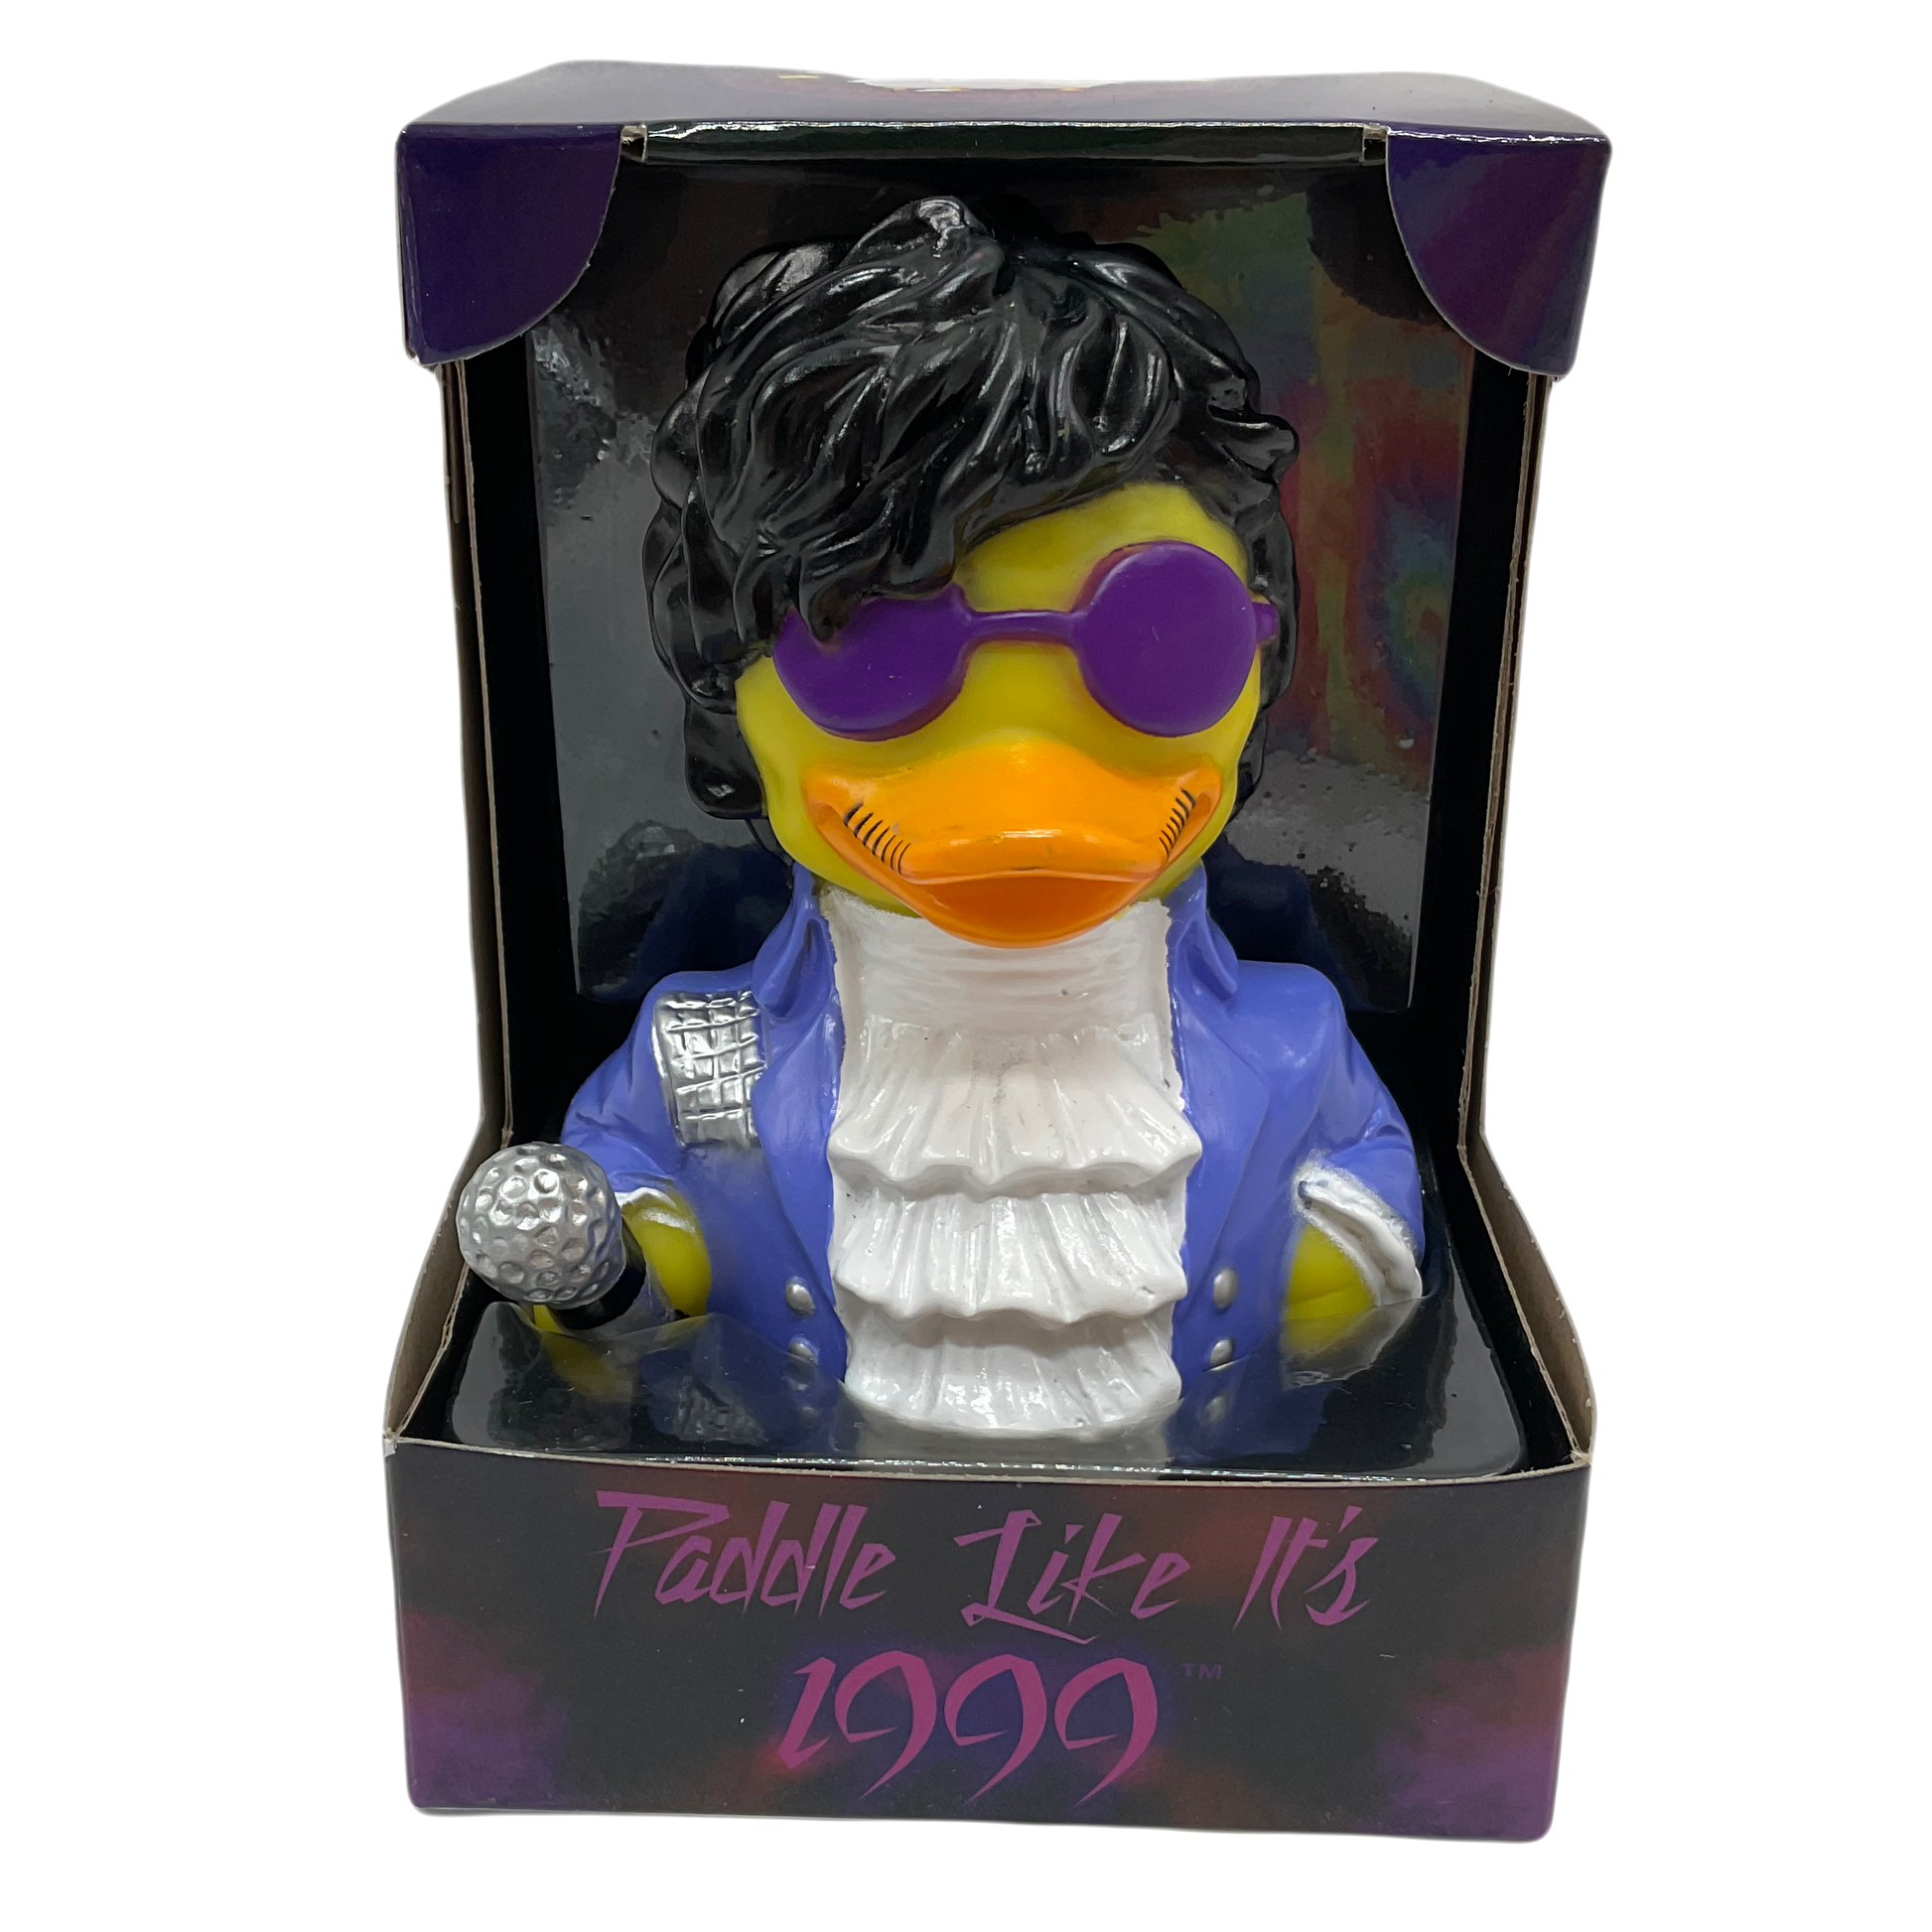 Paddle Like It's 1999 Prince Celebriduck Rubber Duck